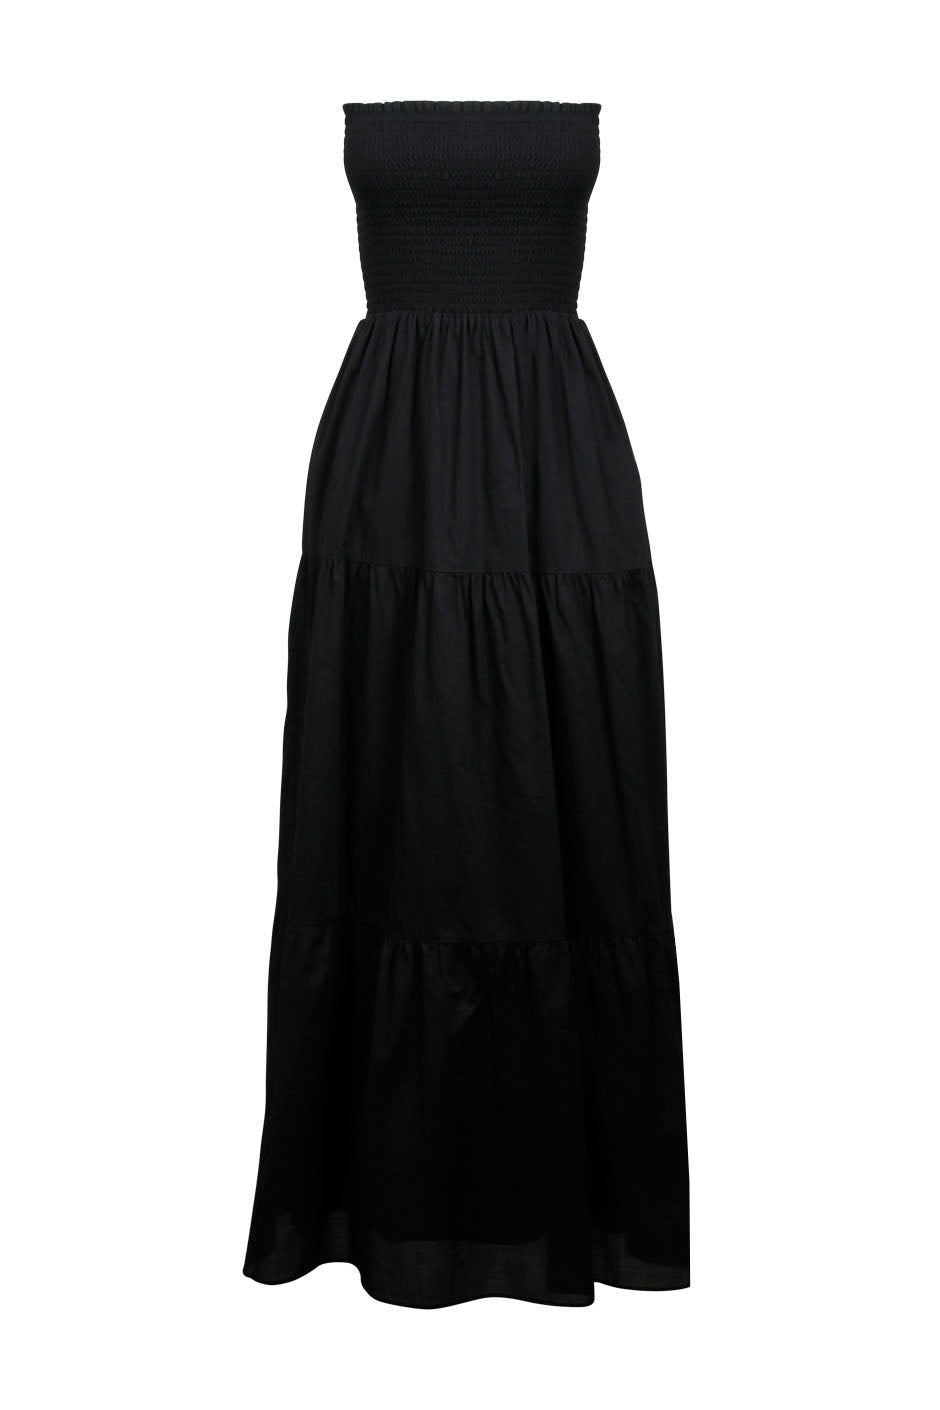 black strapless maxi dress casual